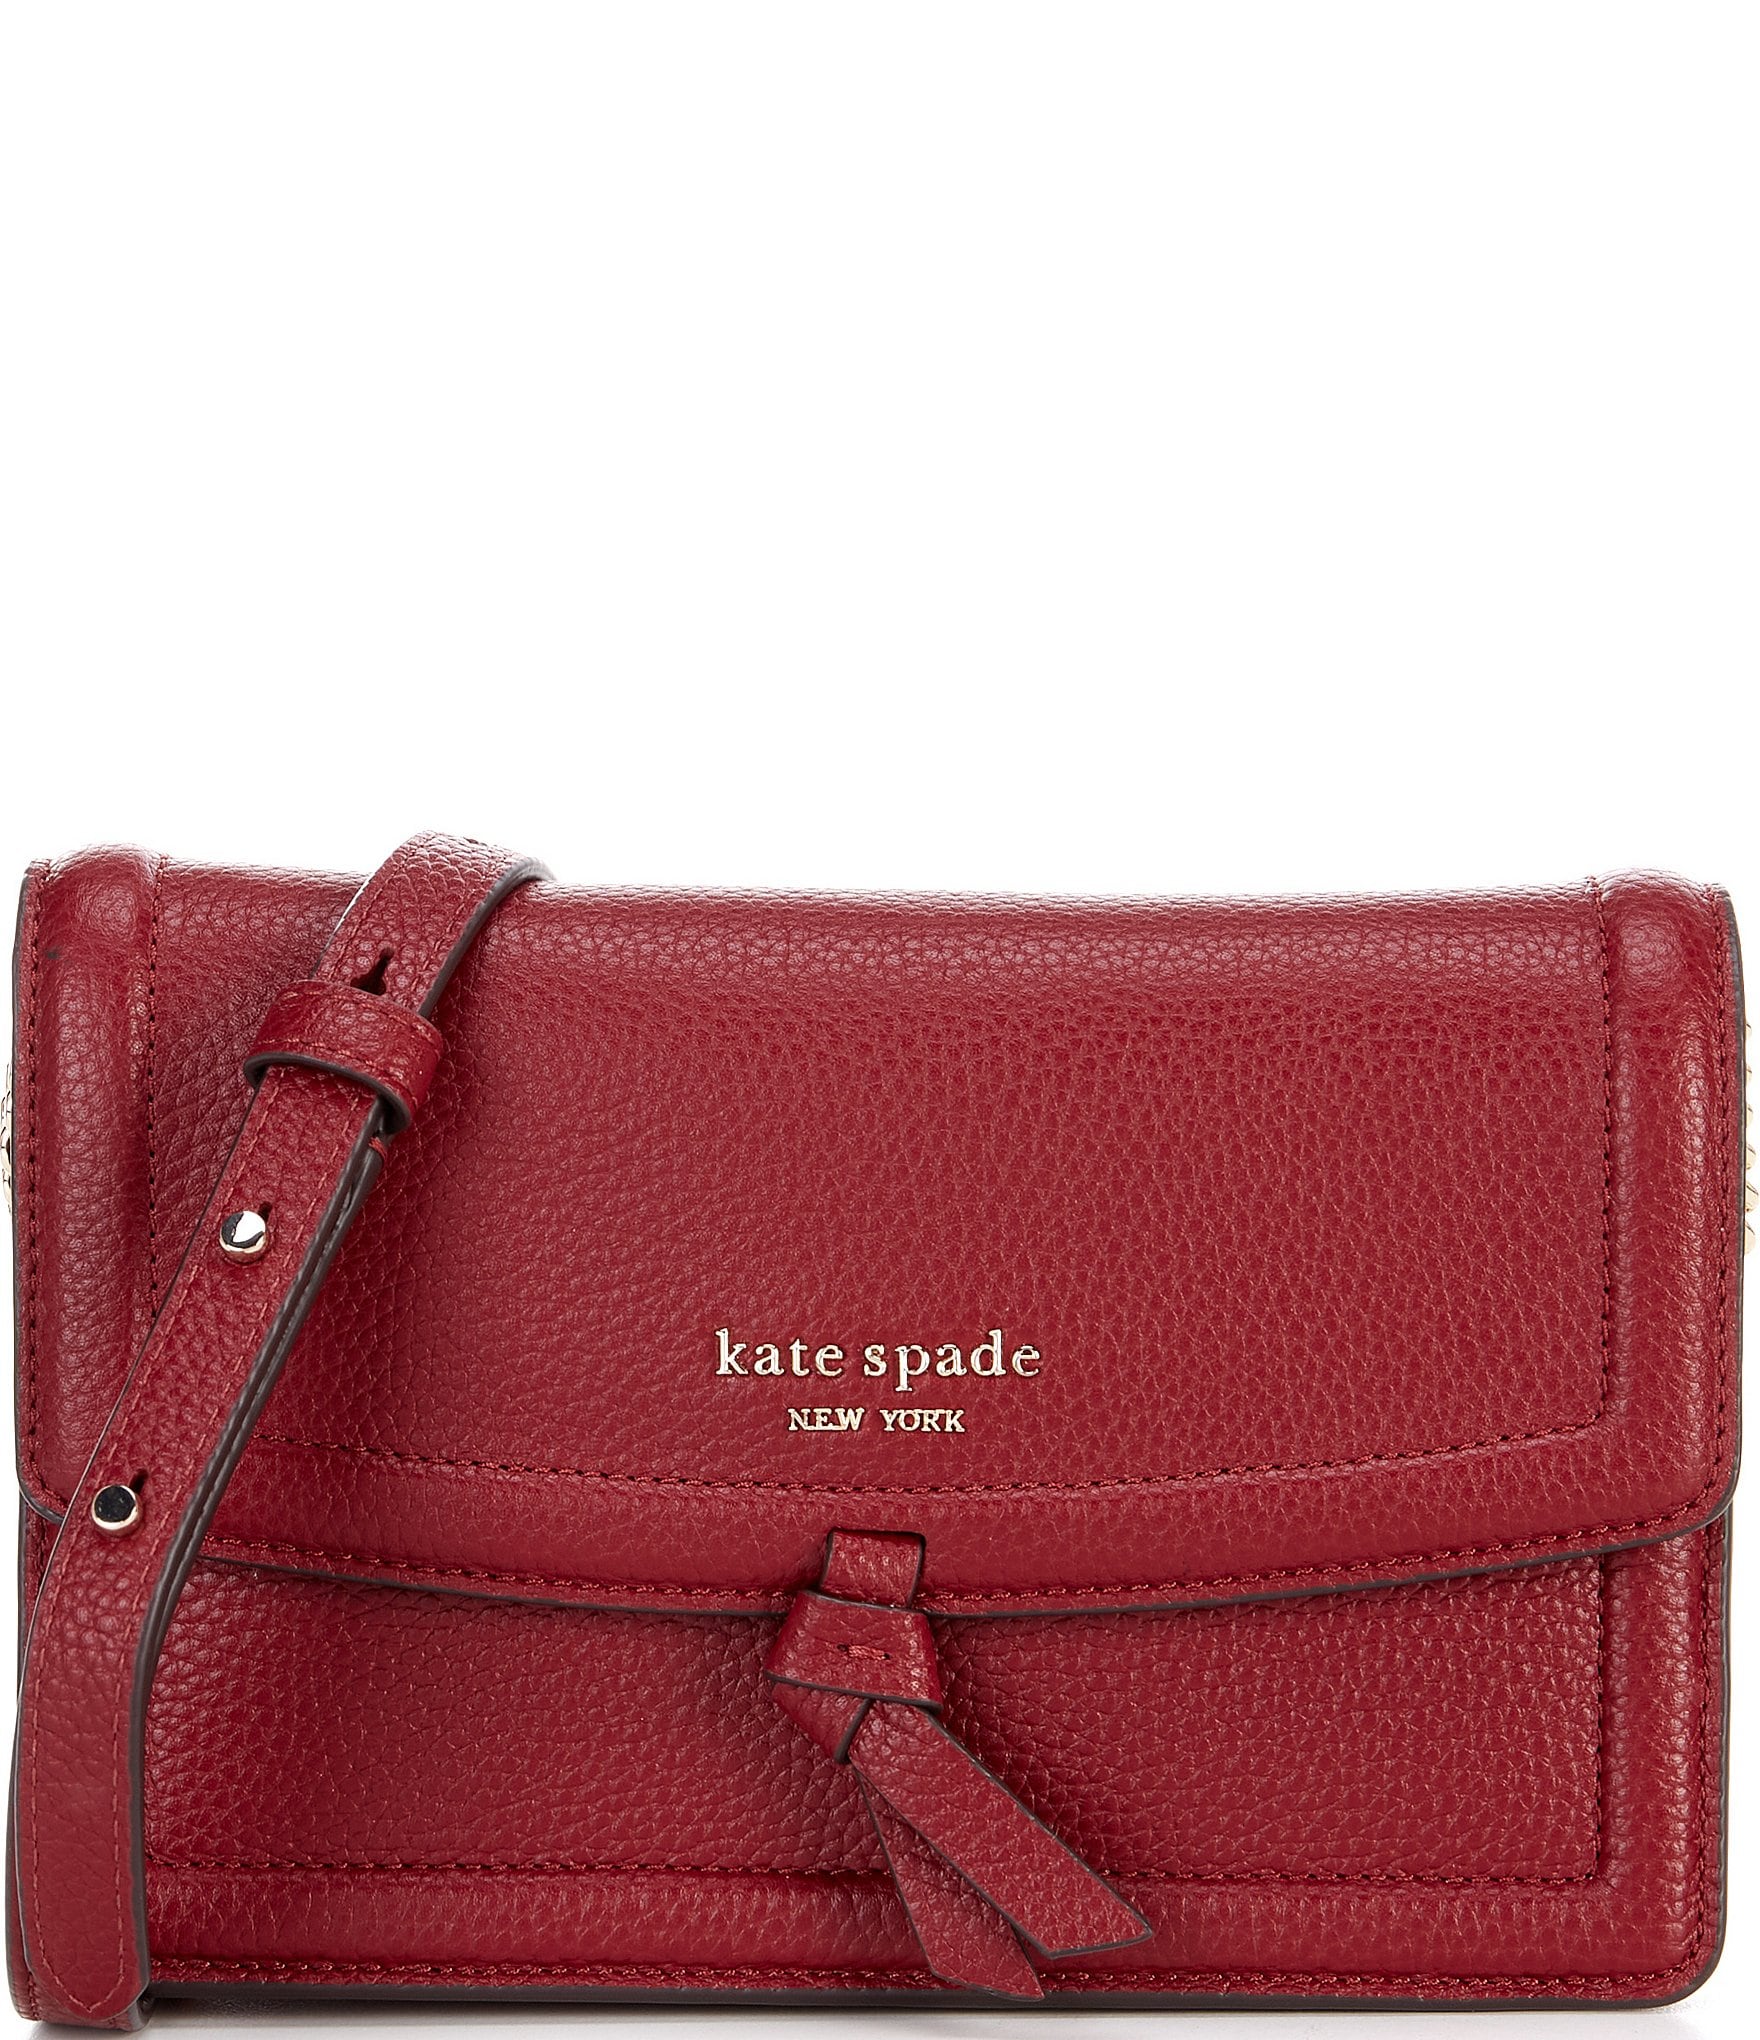 kate spade new york Knott Pebbled Leather Flap Crossbody Bag | Dillard's